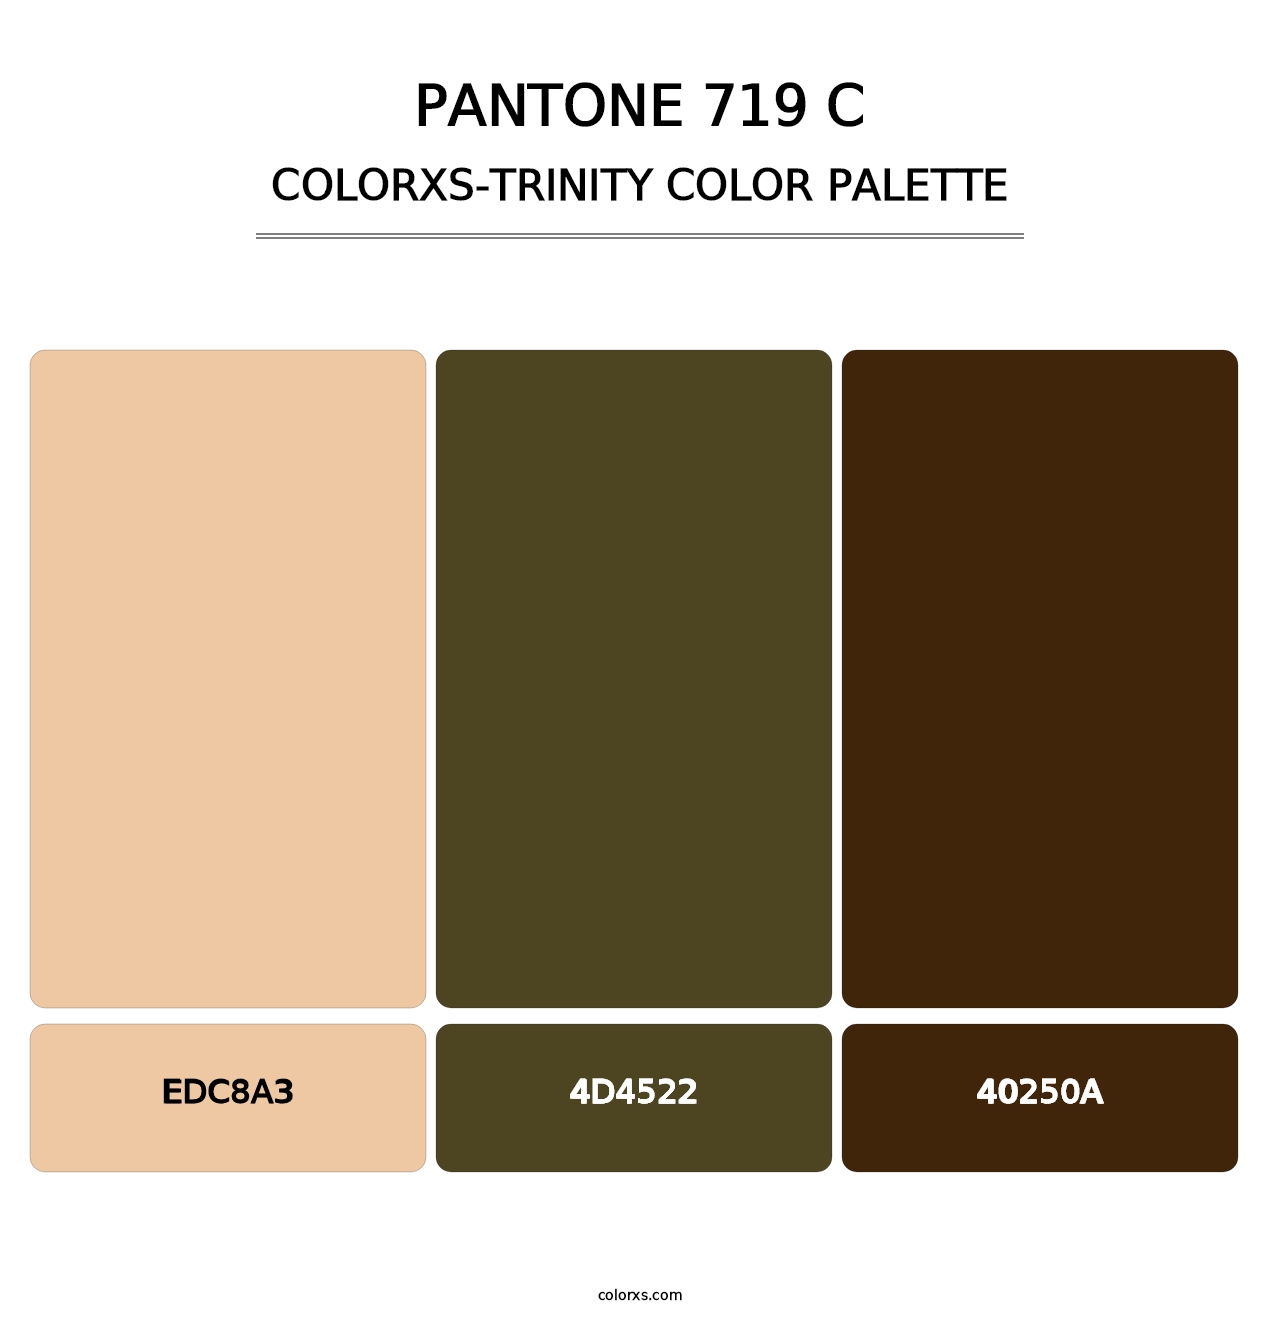 PANTONE 719 C - Colorxs Trinity Palette